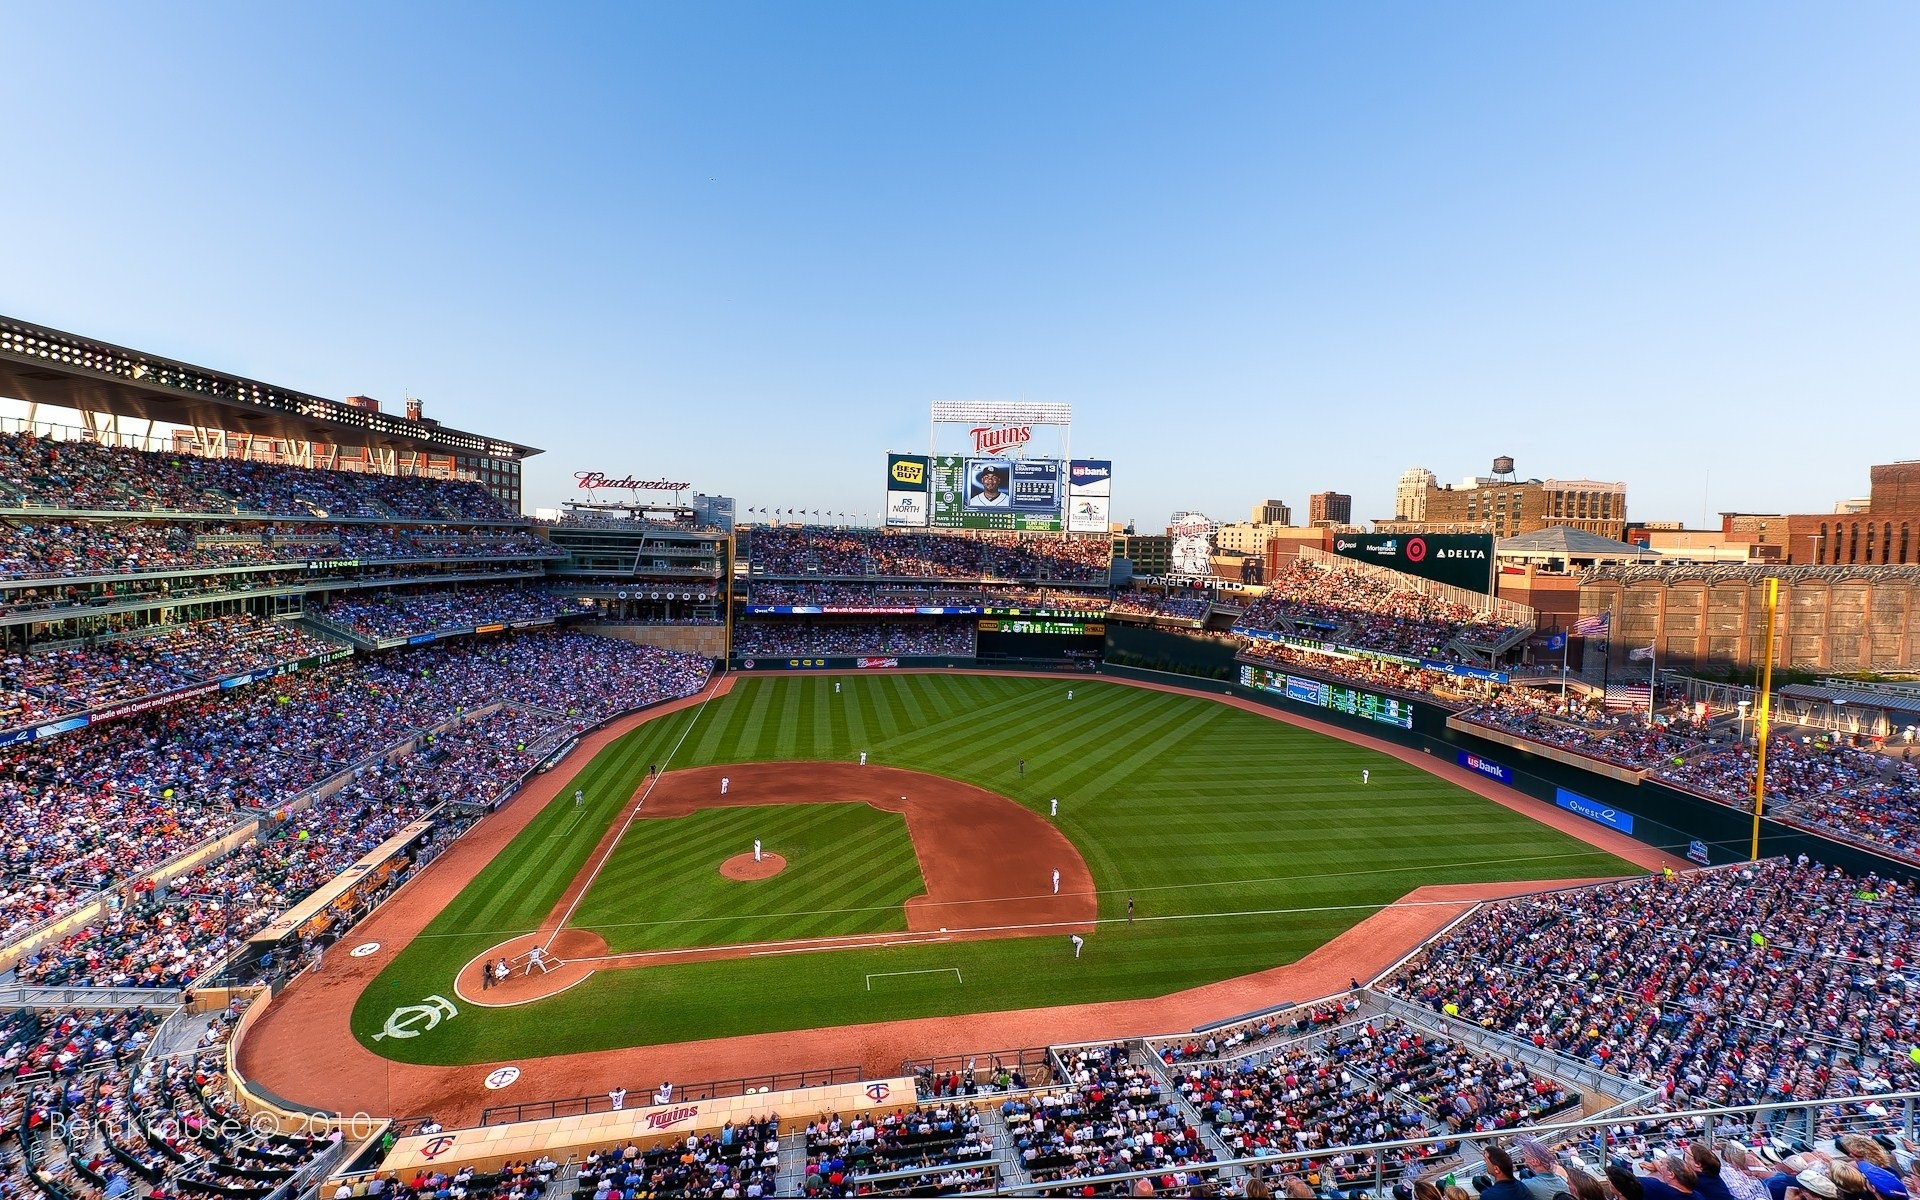 Best 100 Baseball Stadium Pictures  Download Free Images on Unsplash